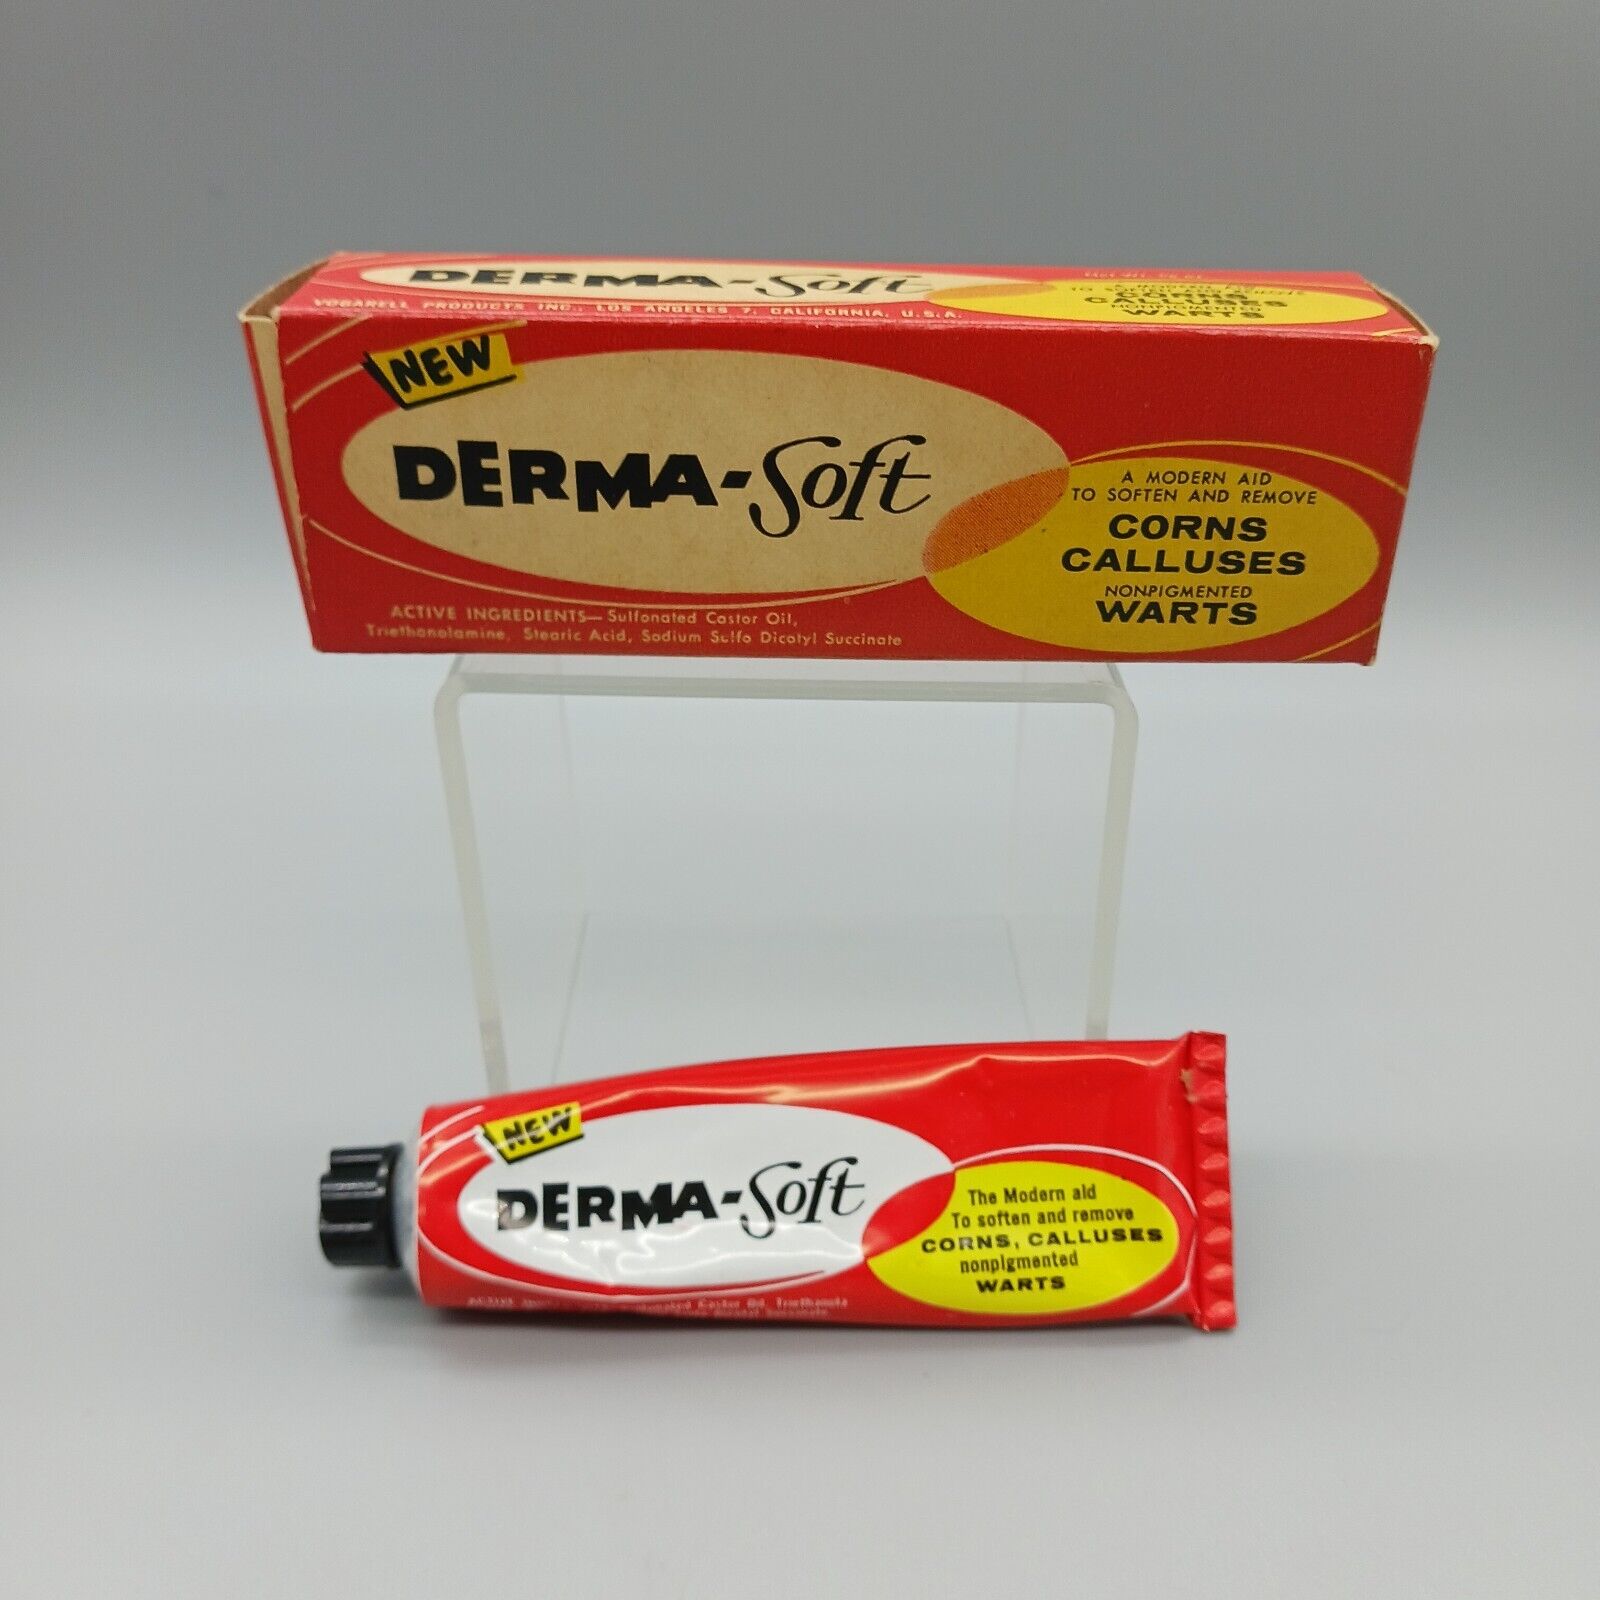 Vintage Derma-Soft Tube with Original Box